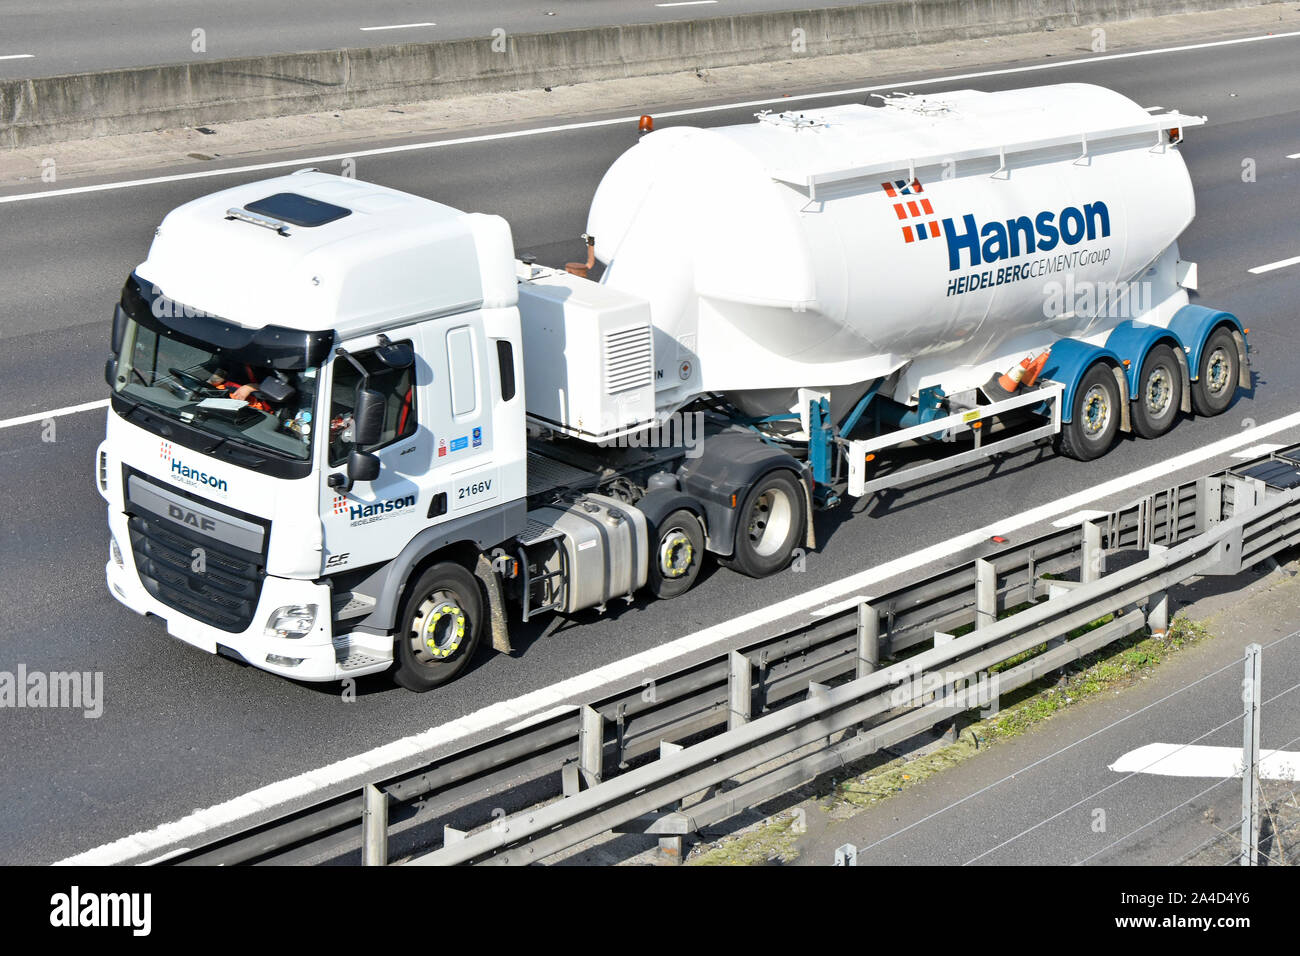 Logo & advertising on side of Hanson Heidelberg bulk cement supply chain business group tanker trailer & hgv lorry truck driving along UK M25 motorway Stock Photo